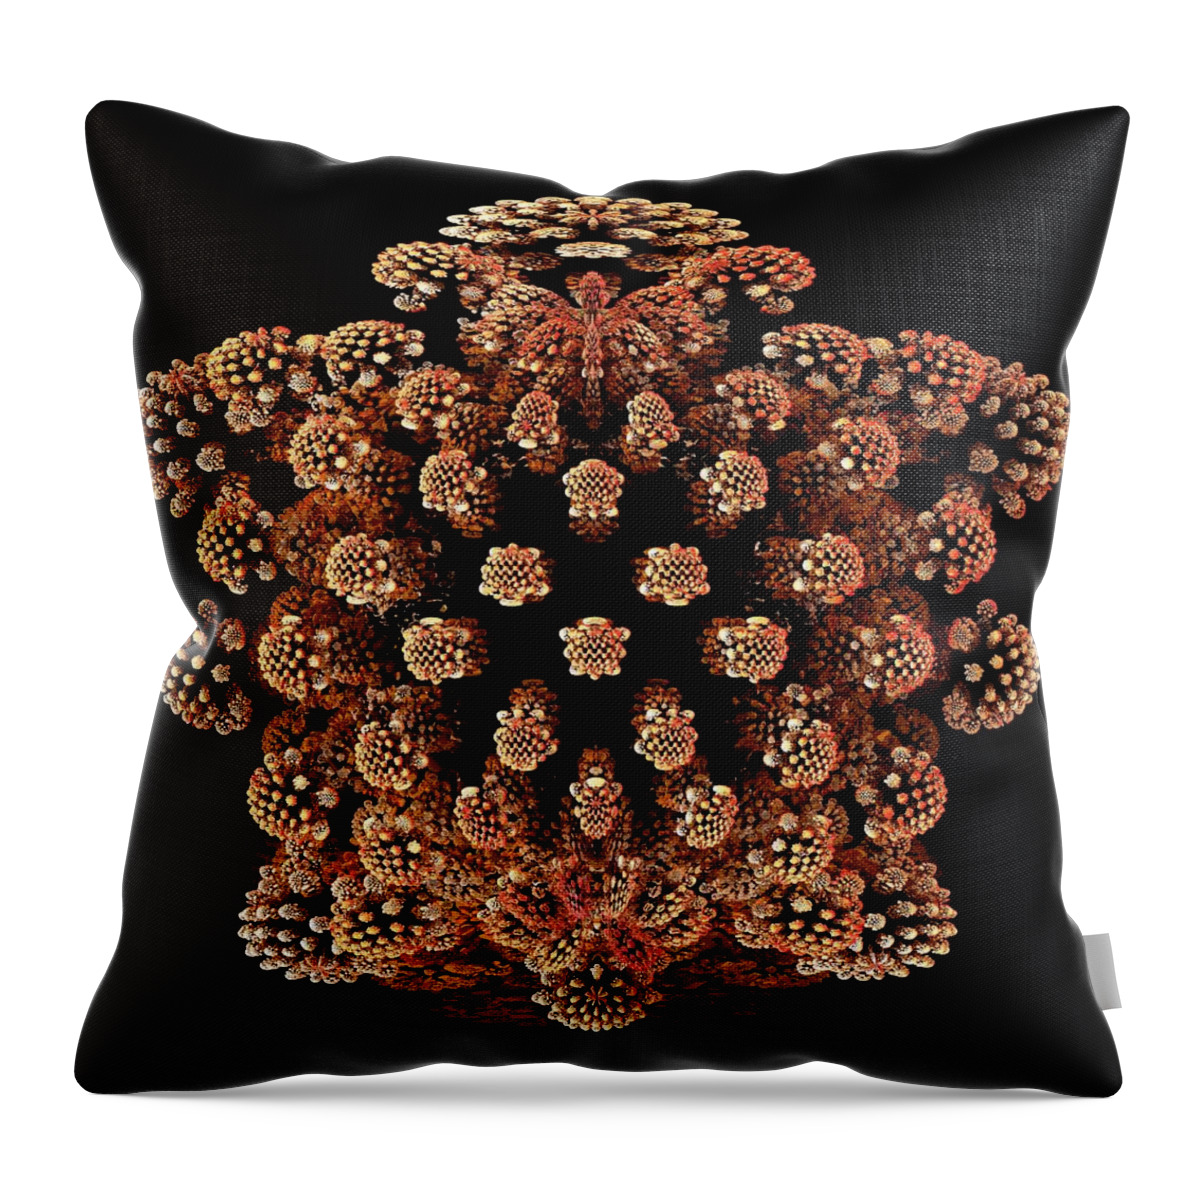 Natural Pattern Throw Pillow featuring the digital art Mandelbulb Fractal #17 by Laguna Design